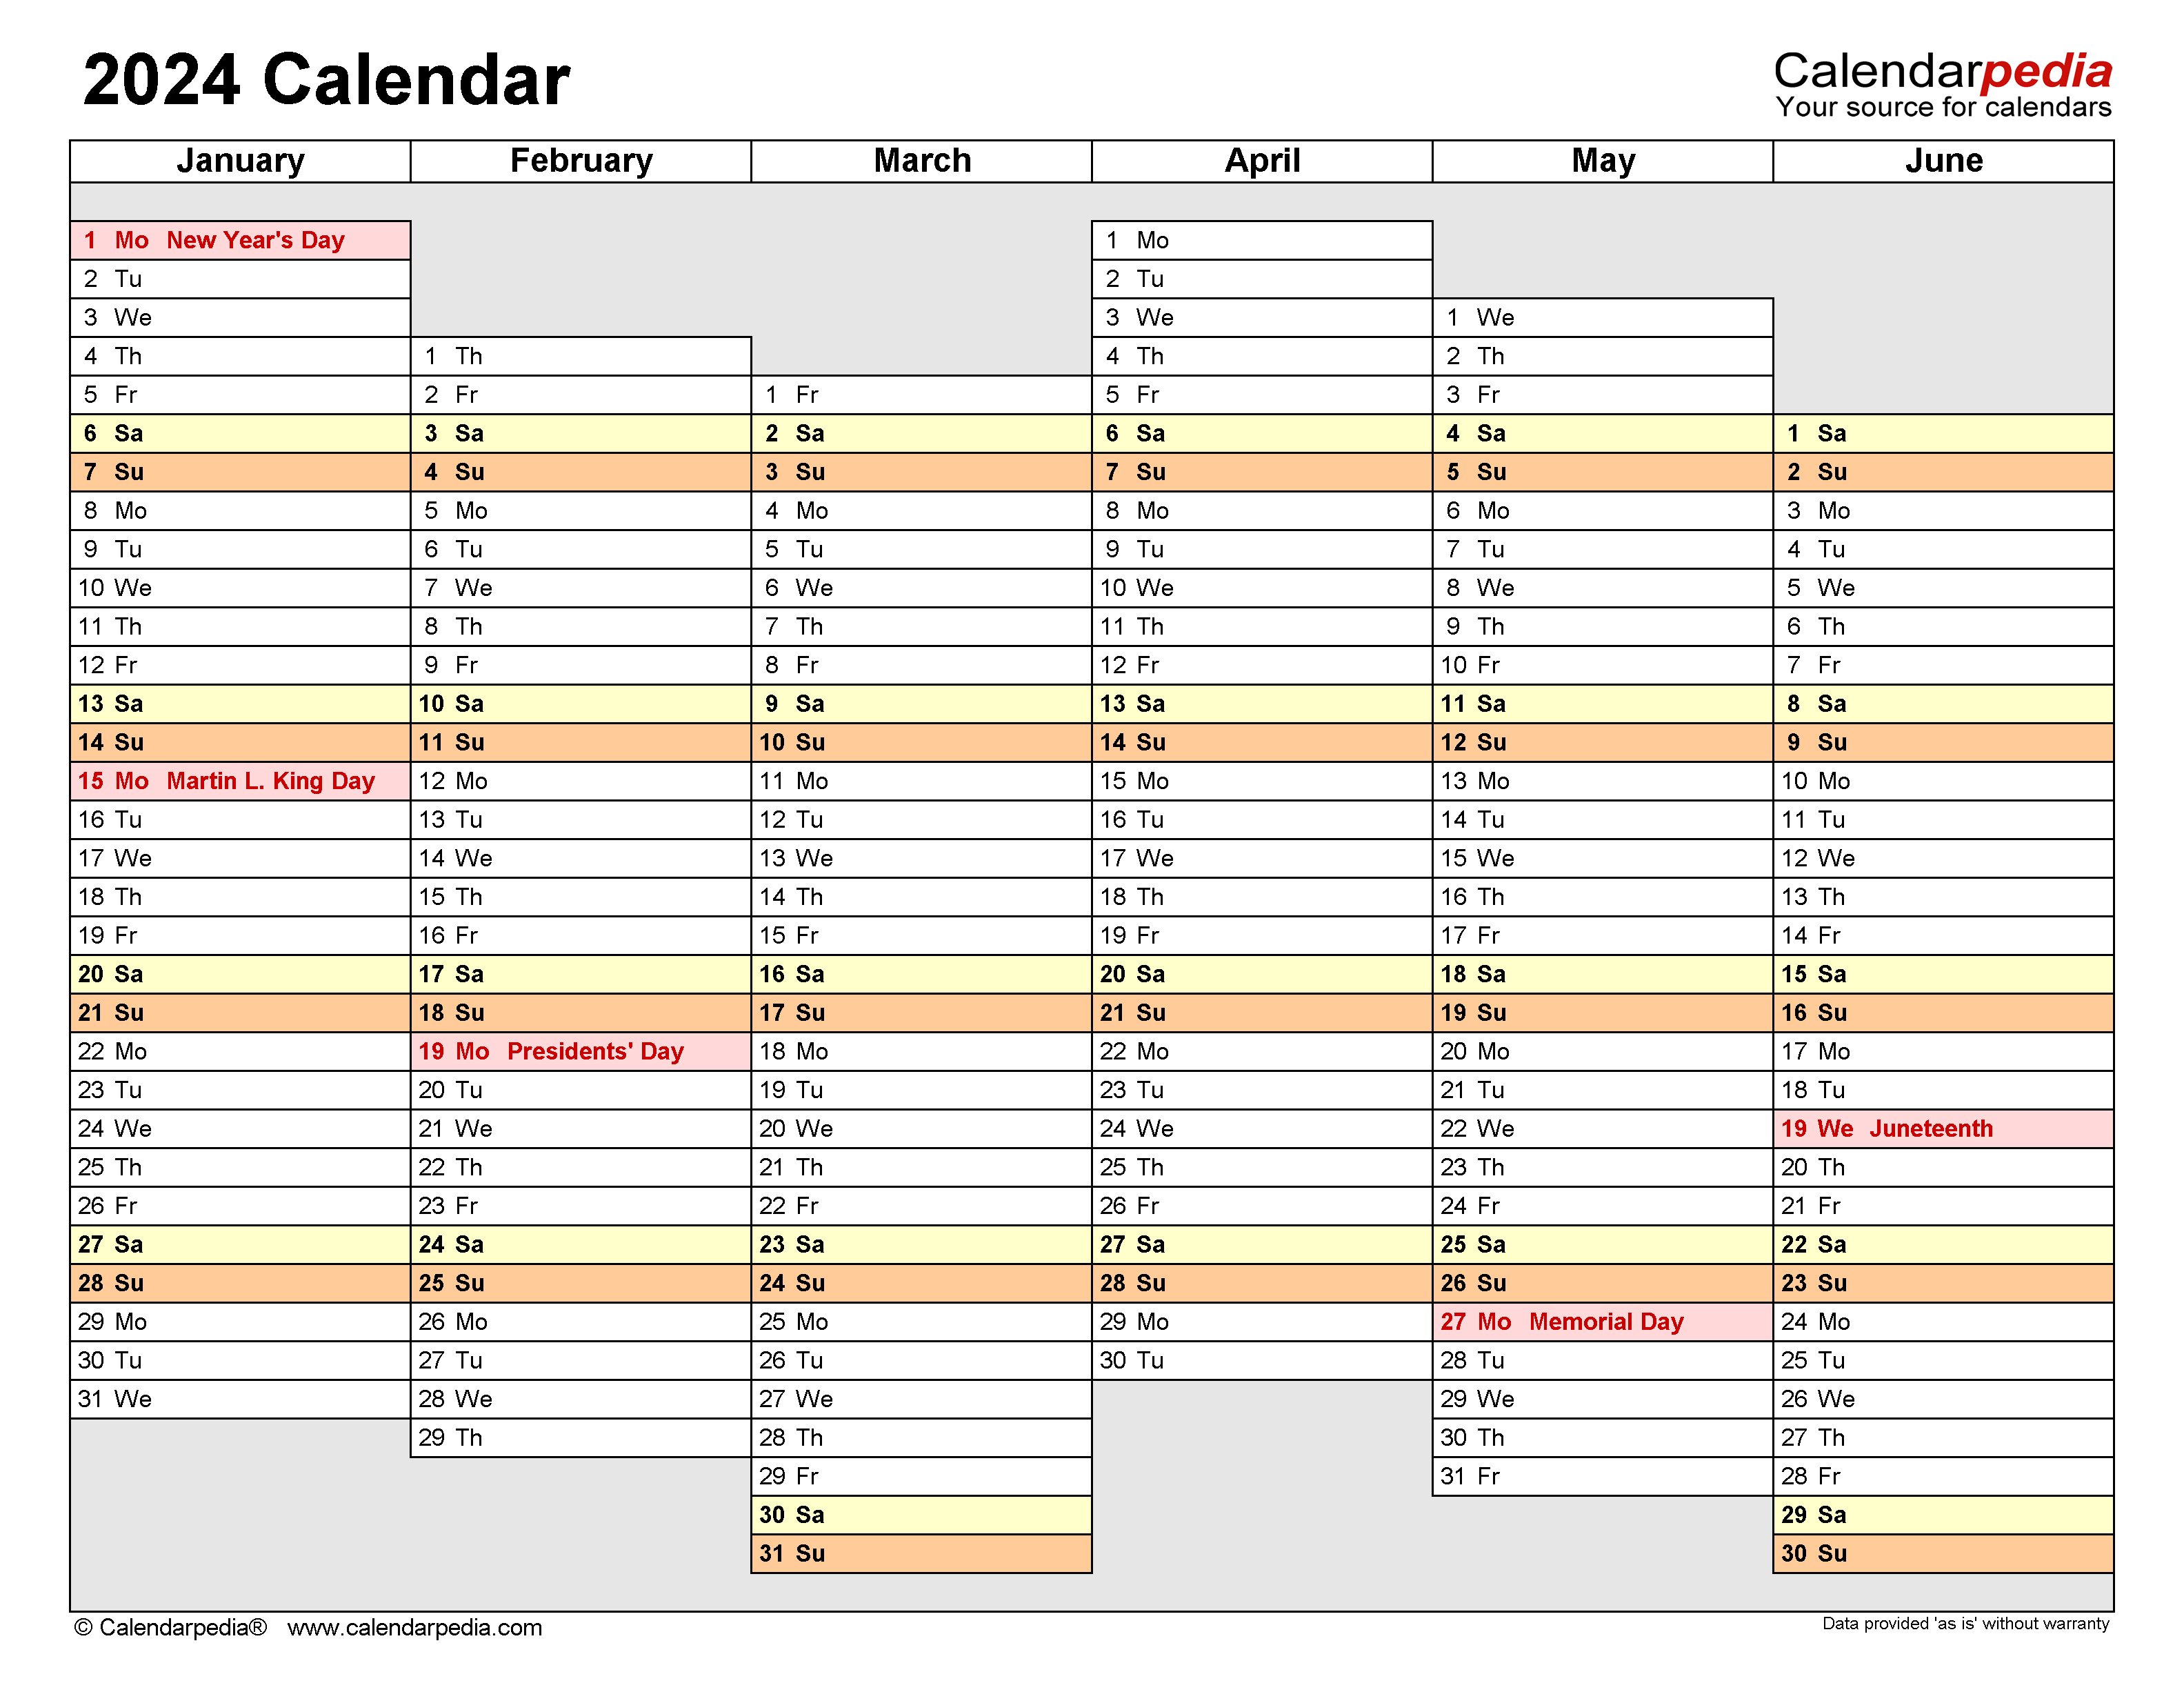 2024 Calendar - Free Printable Word Templates - Calendarpedia for Free Printable Yearly Calendar 2024 With Lines